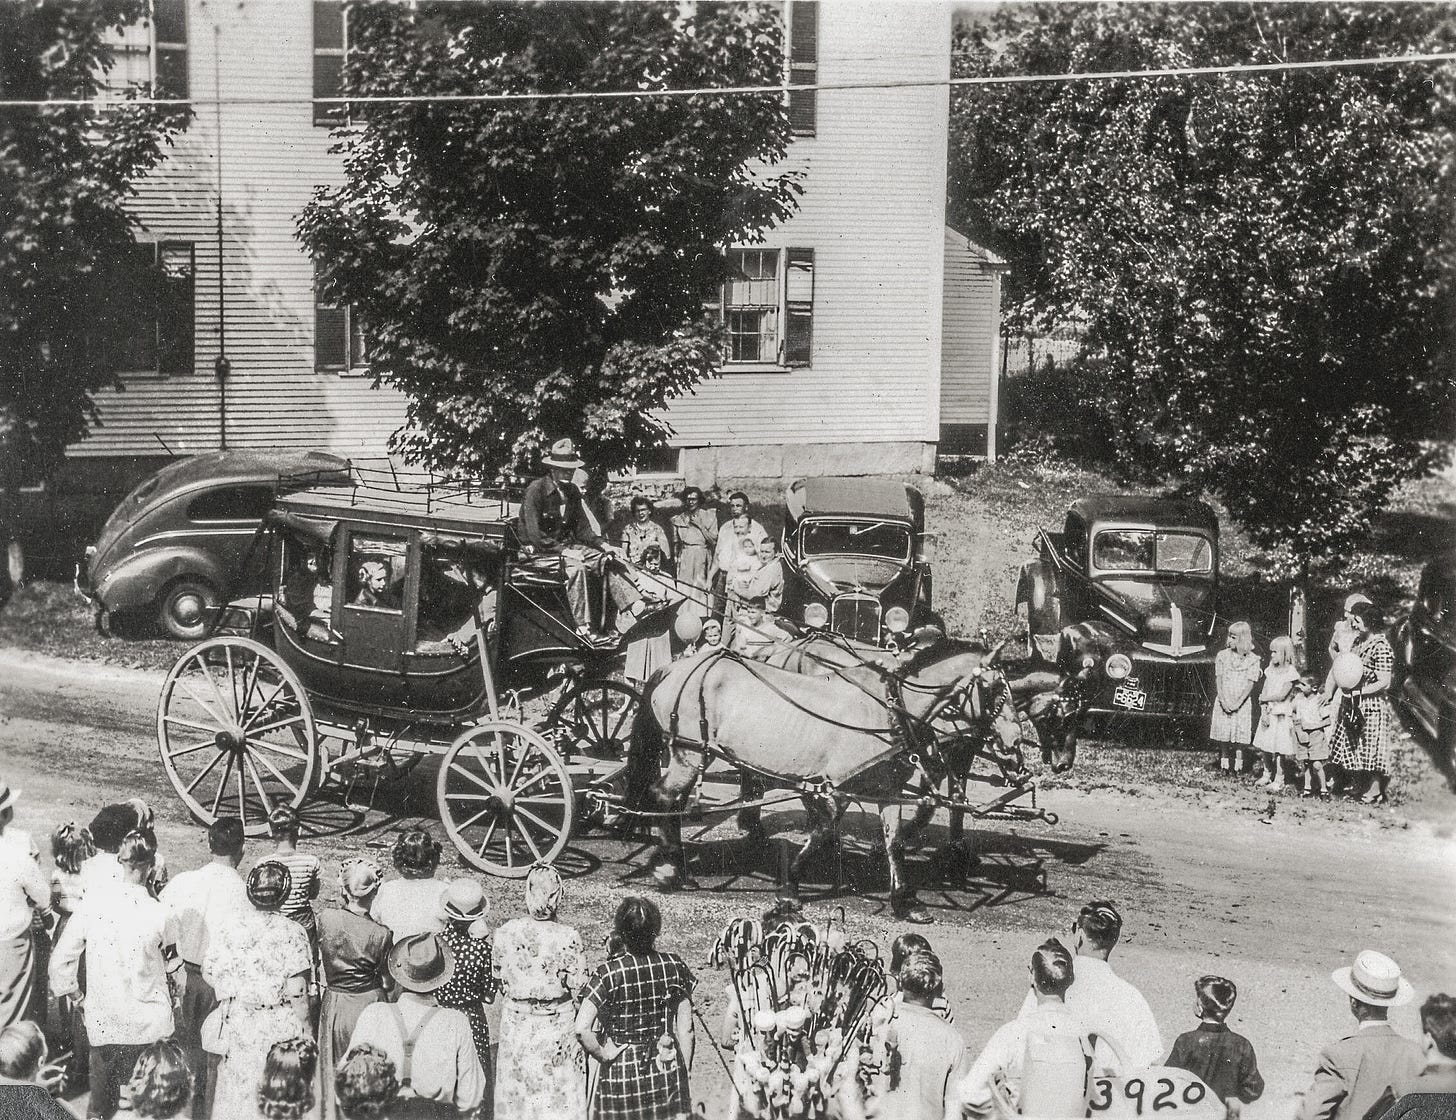 Stagecoach in Bicentennial Parade